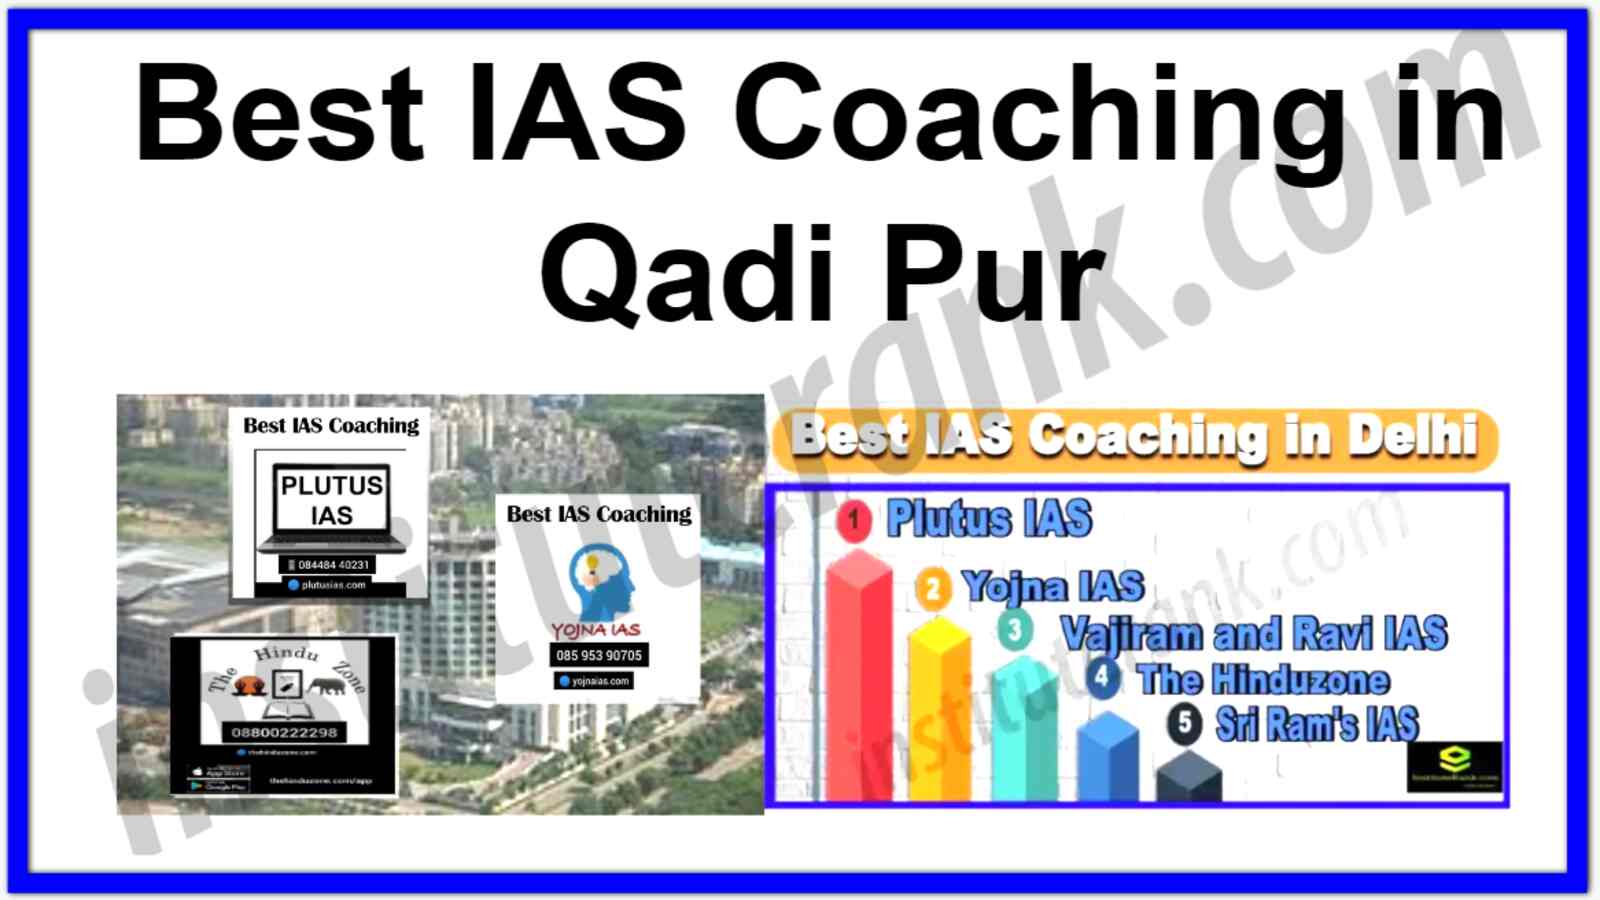 Best IAS Coaching in Qadi Pur